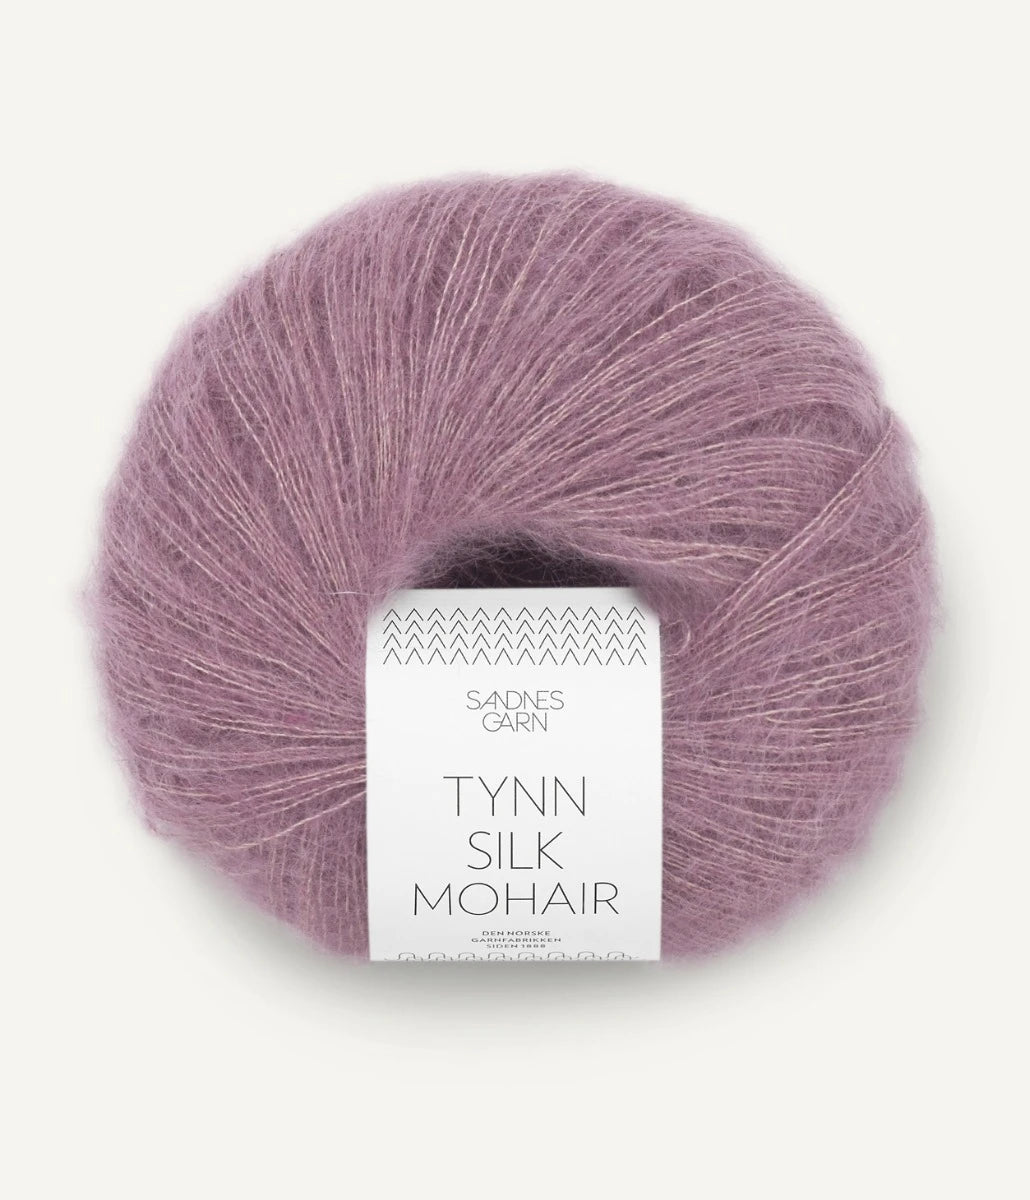 Kuvassa on Sandnes Garn Tynn Silk Mohair -lanka (yarn) värissä Rosa Lavendel.